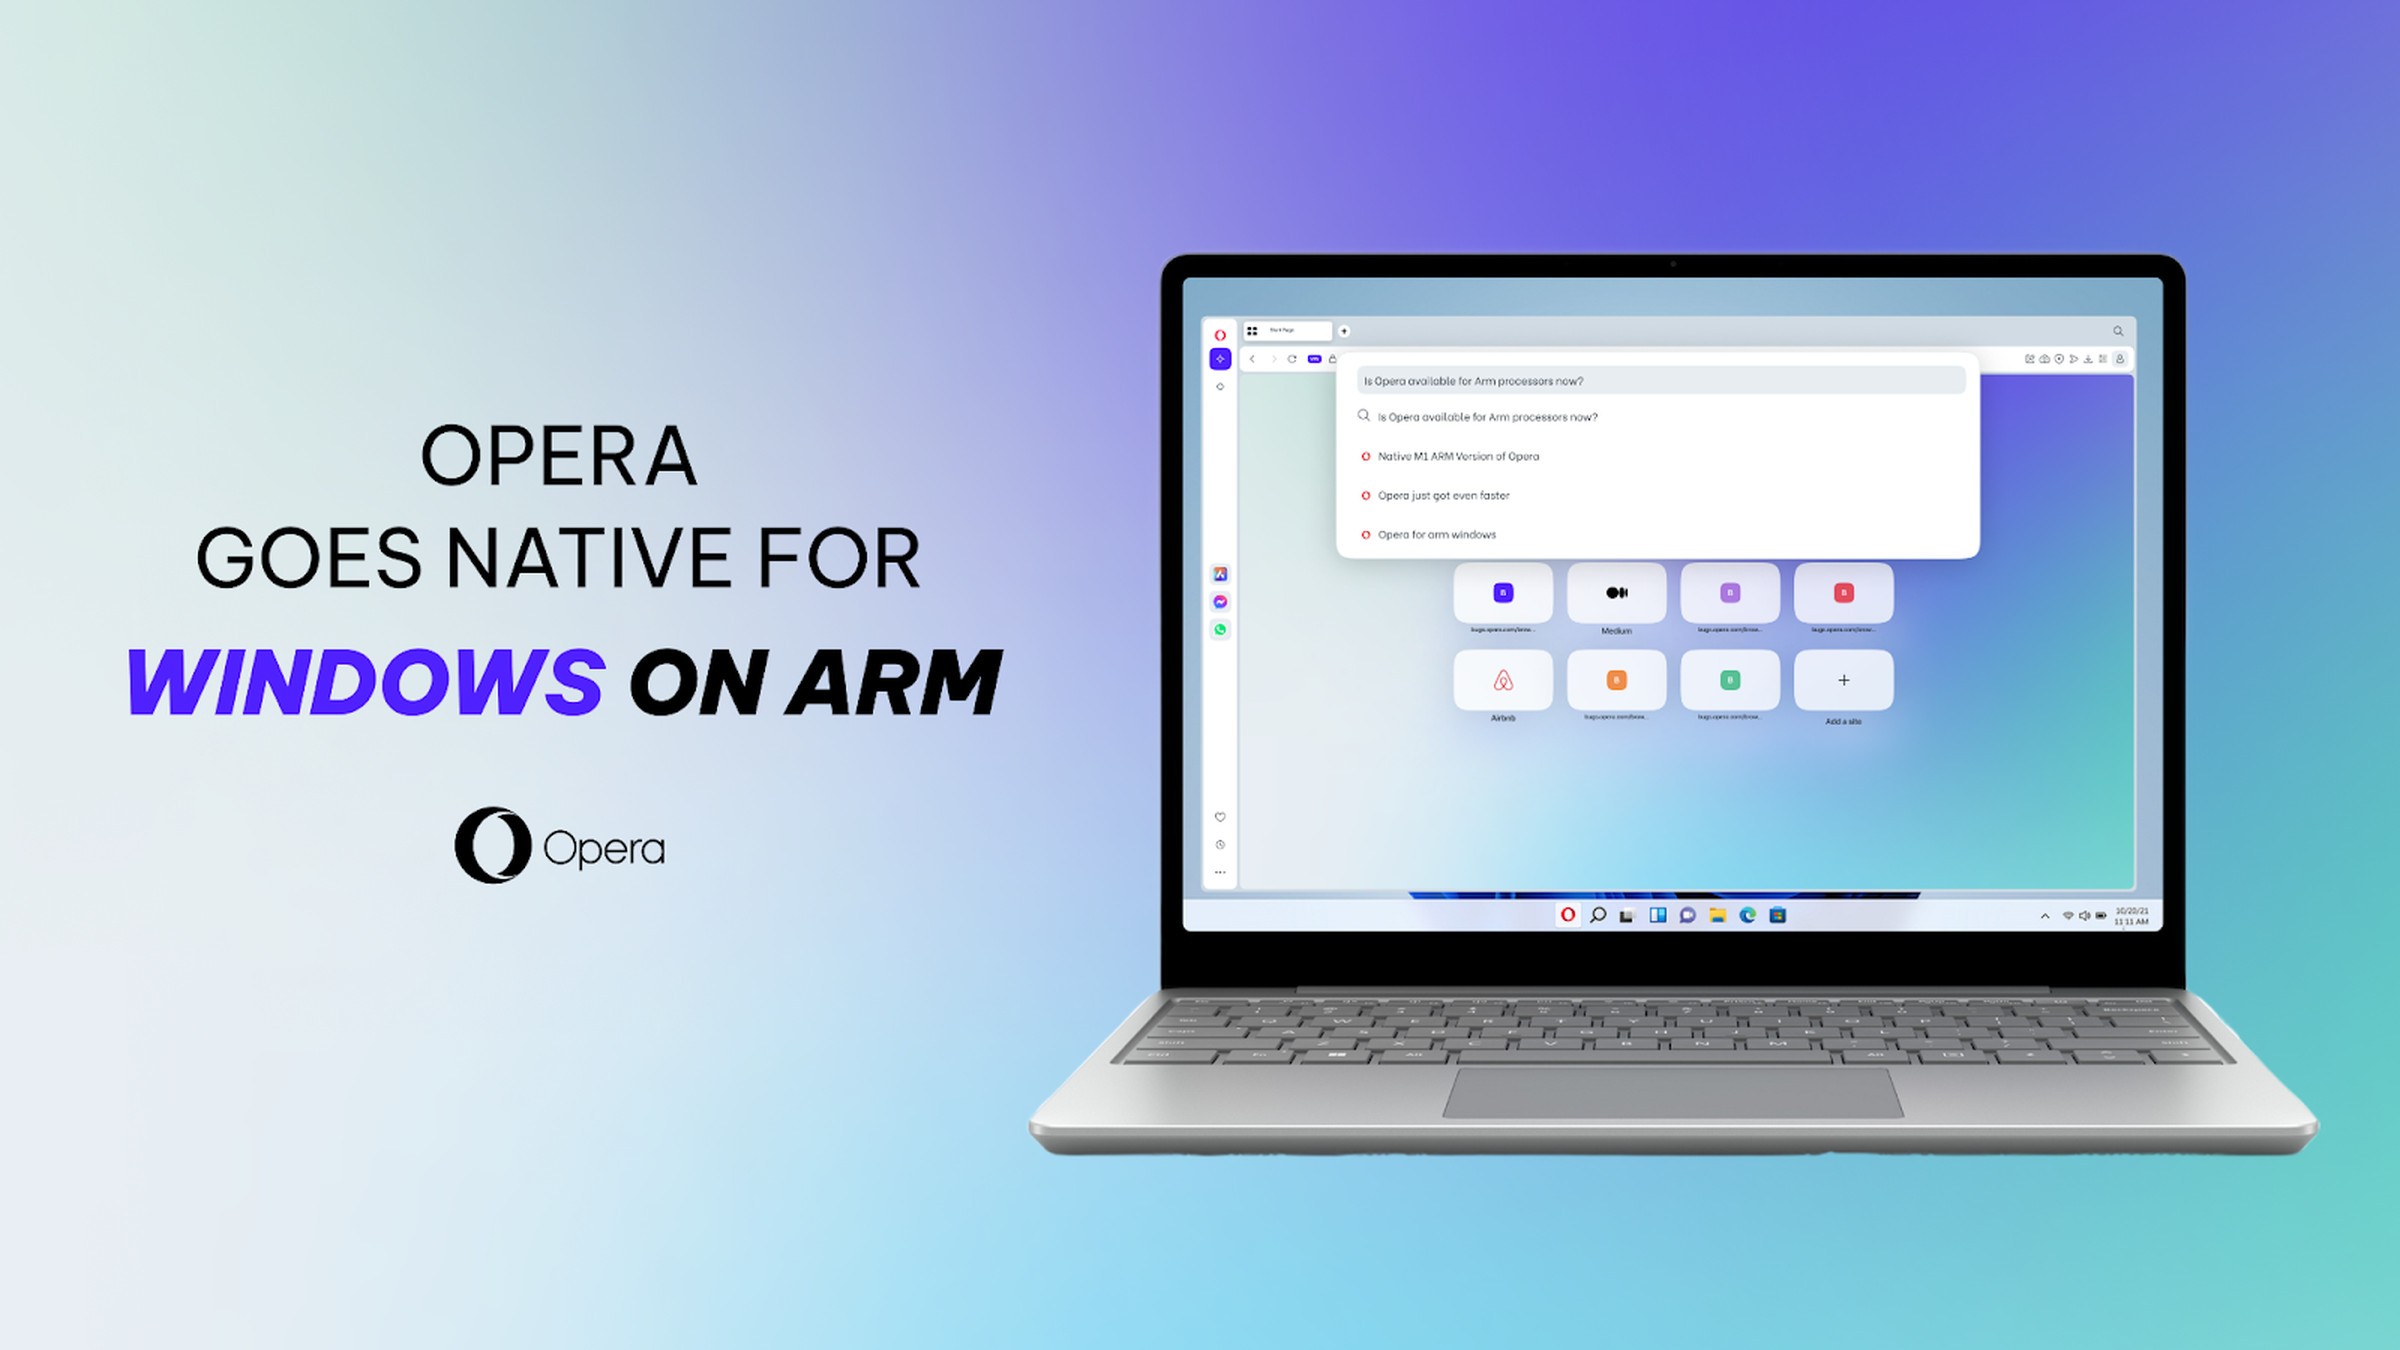 A Windows on Arm laptop running Opera’s web browser.